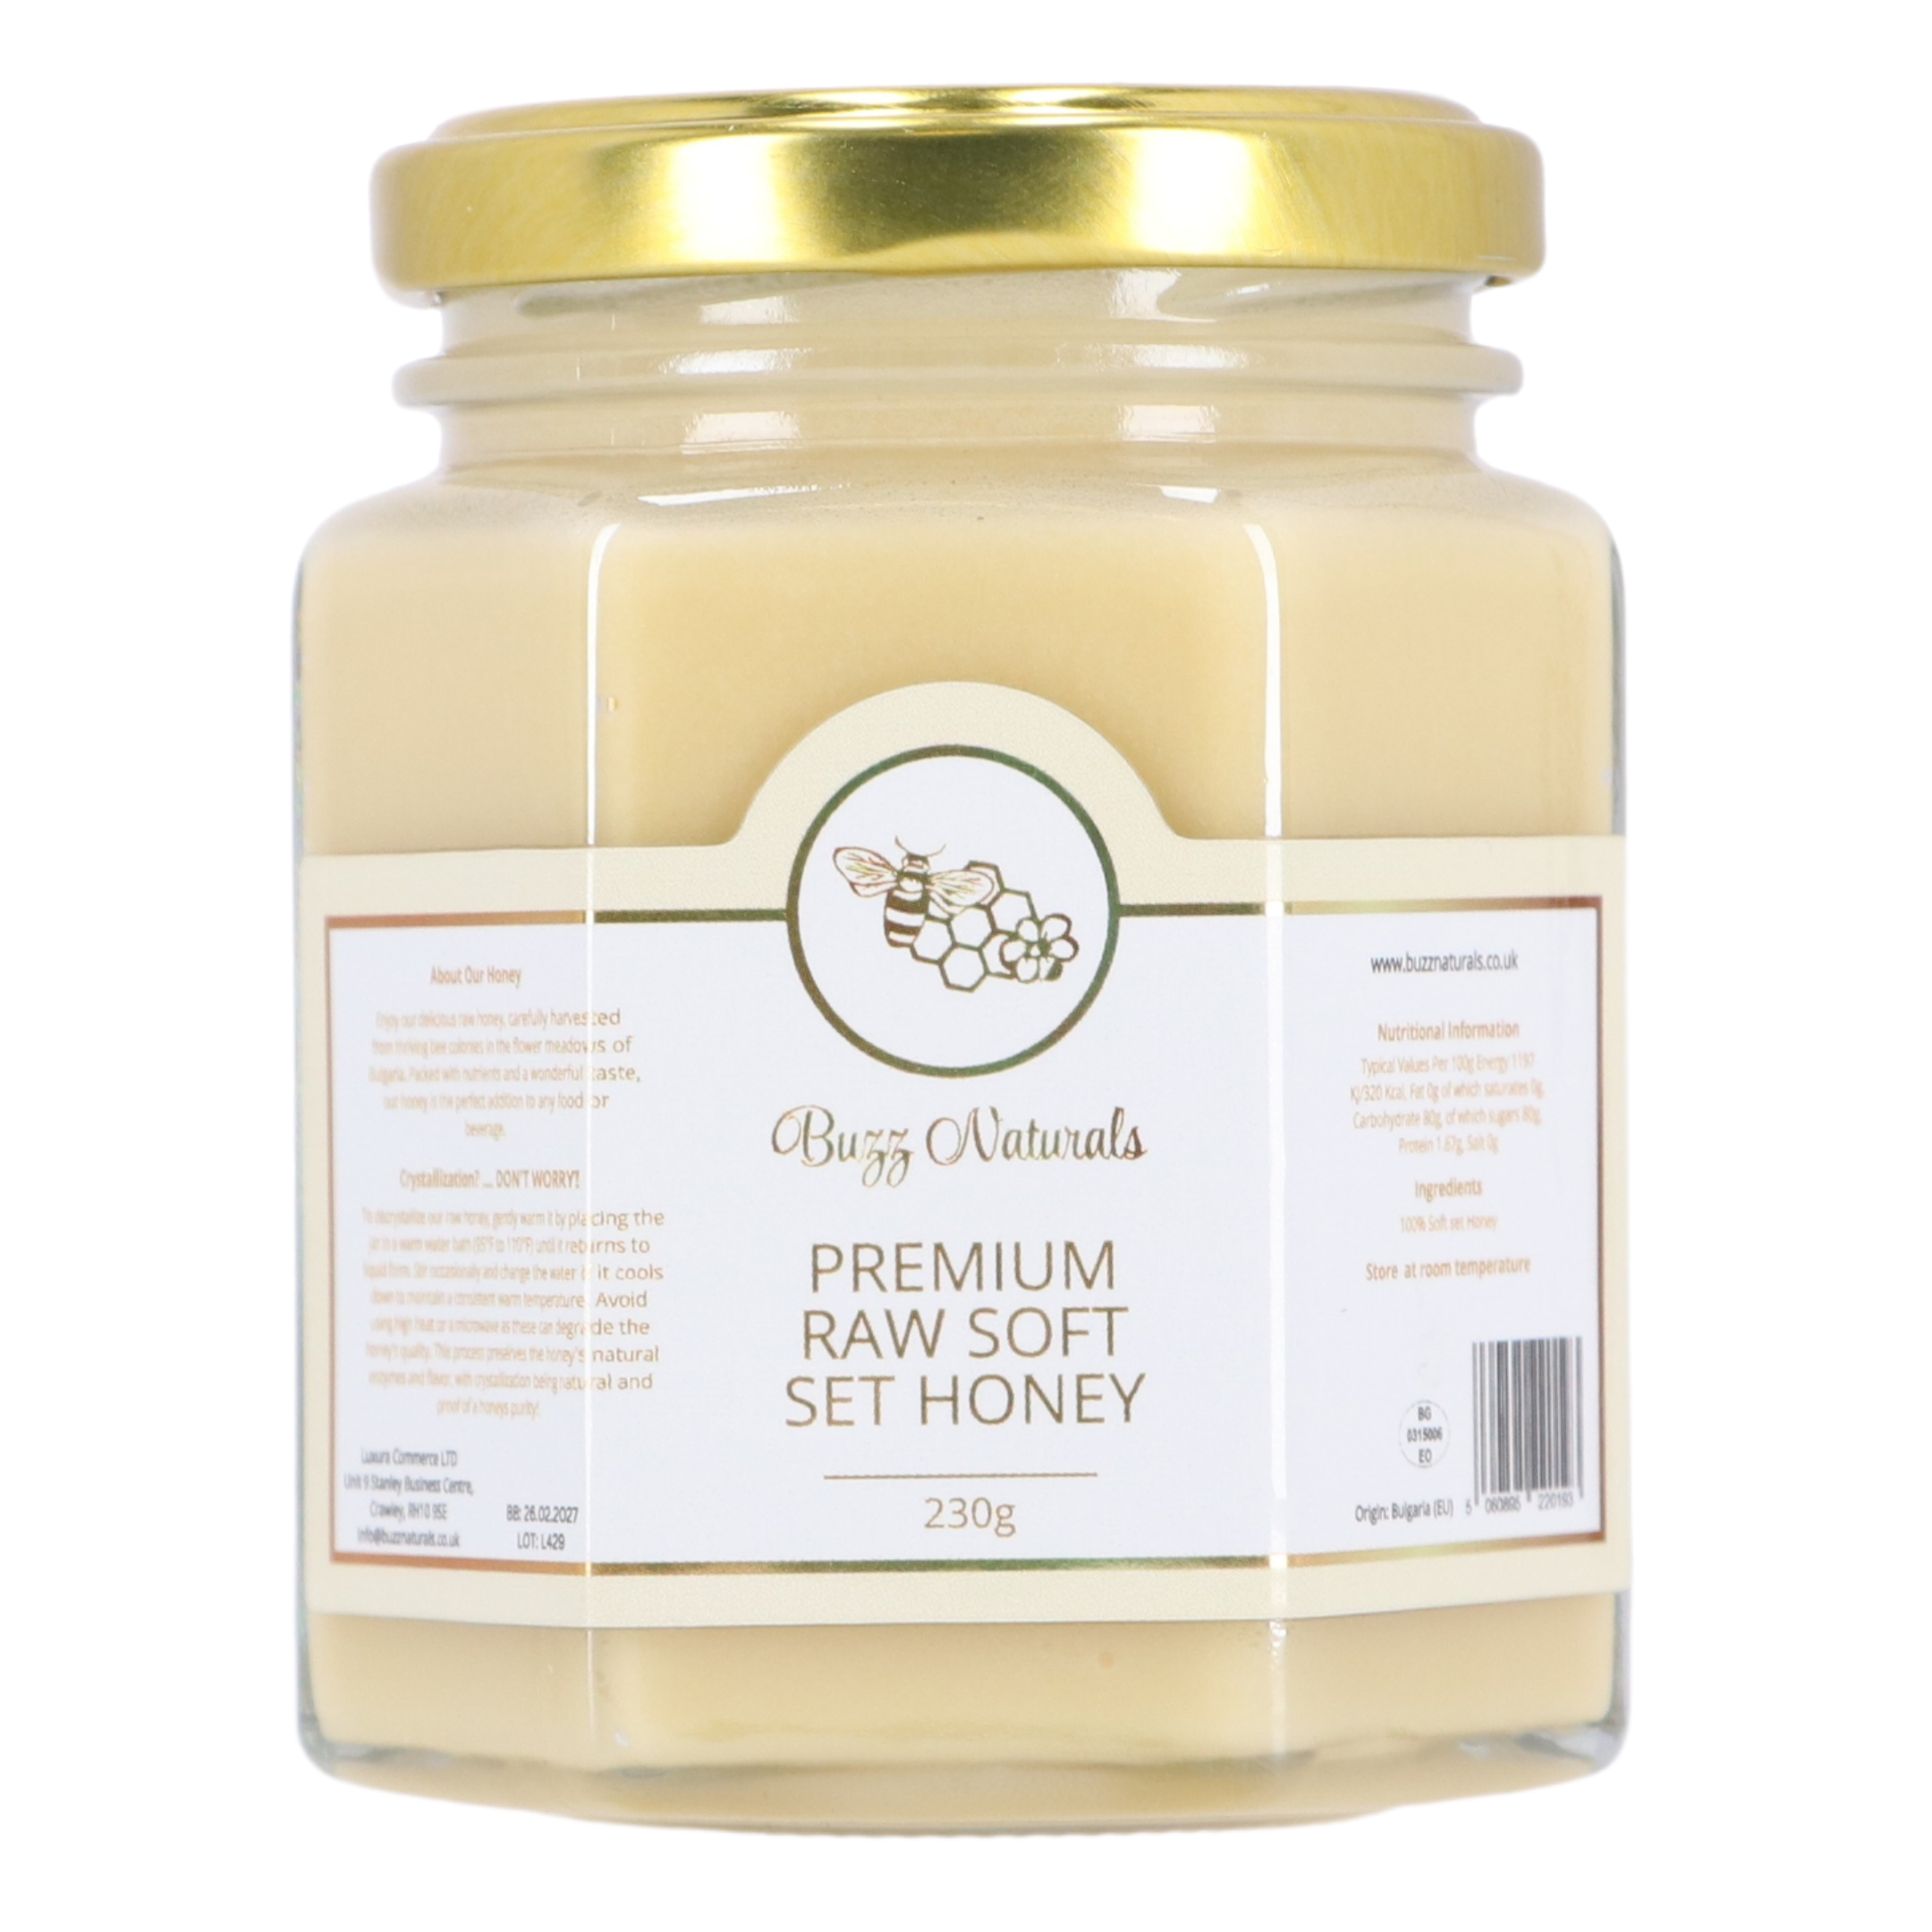 Buzz Premium Raw Soft Set Honey 230g